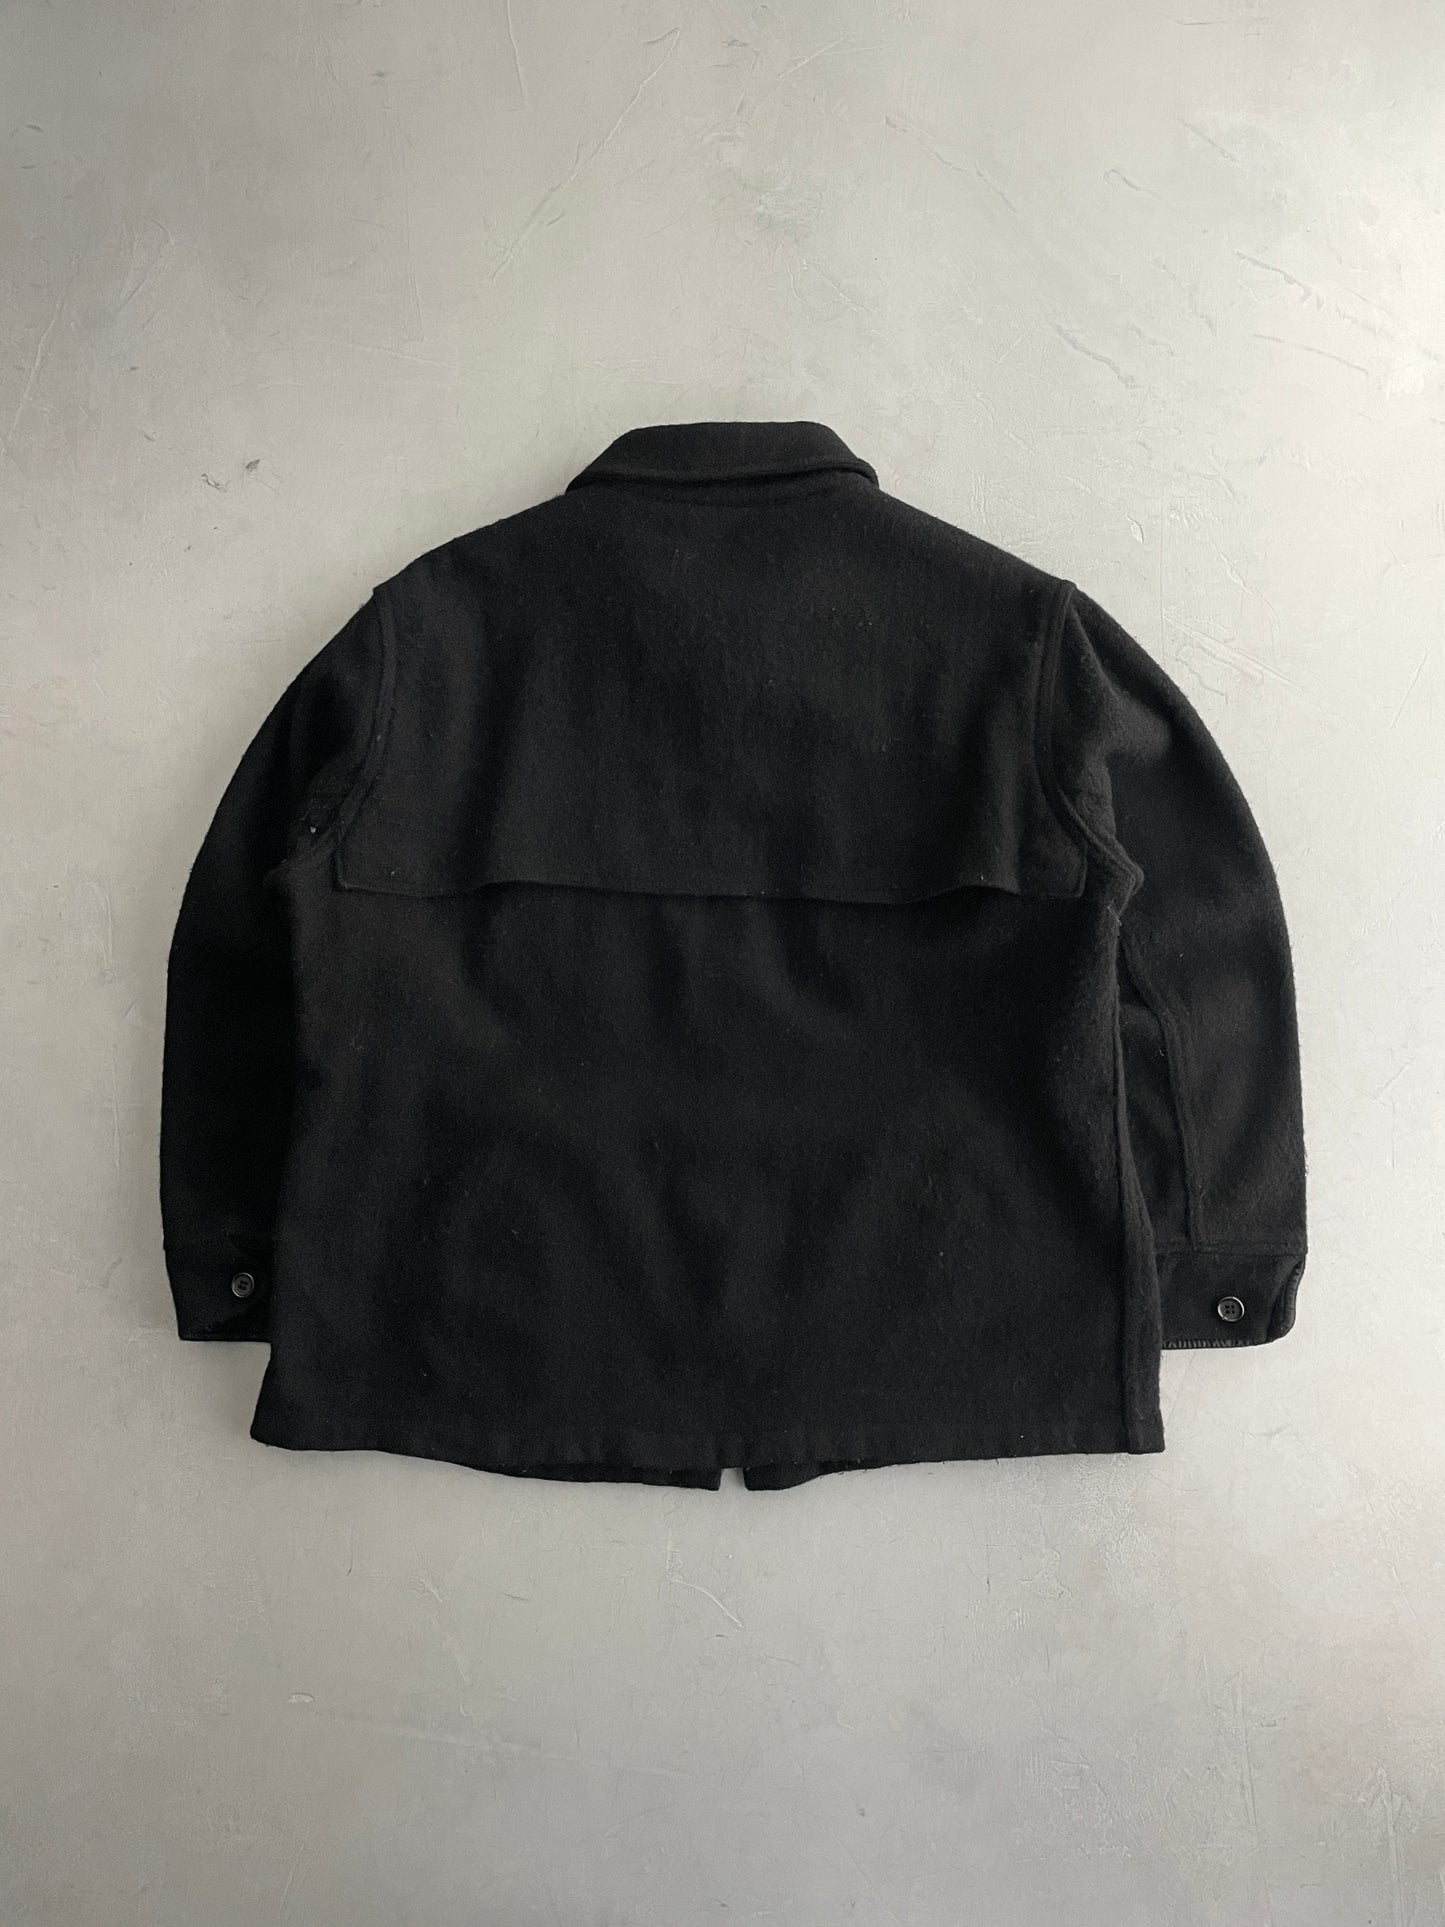 Overdyed Woolrich Jacket [L/XL]